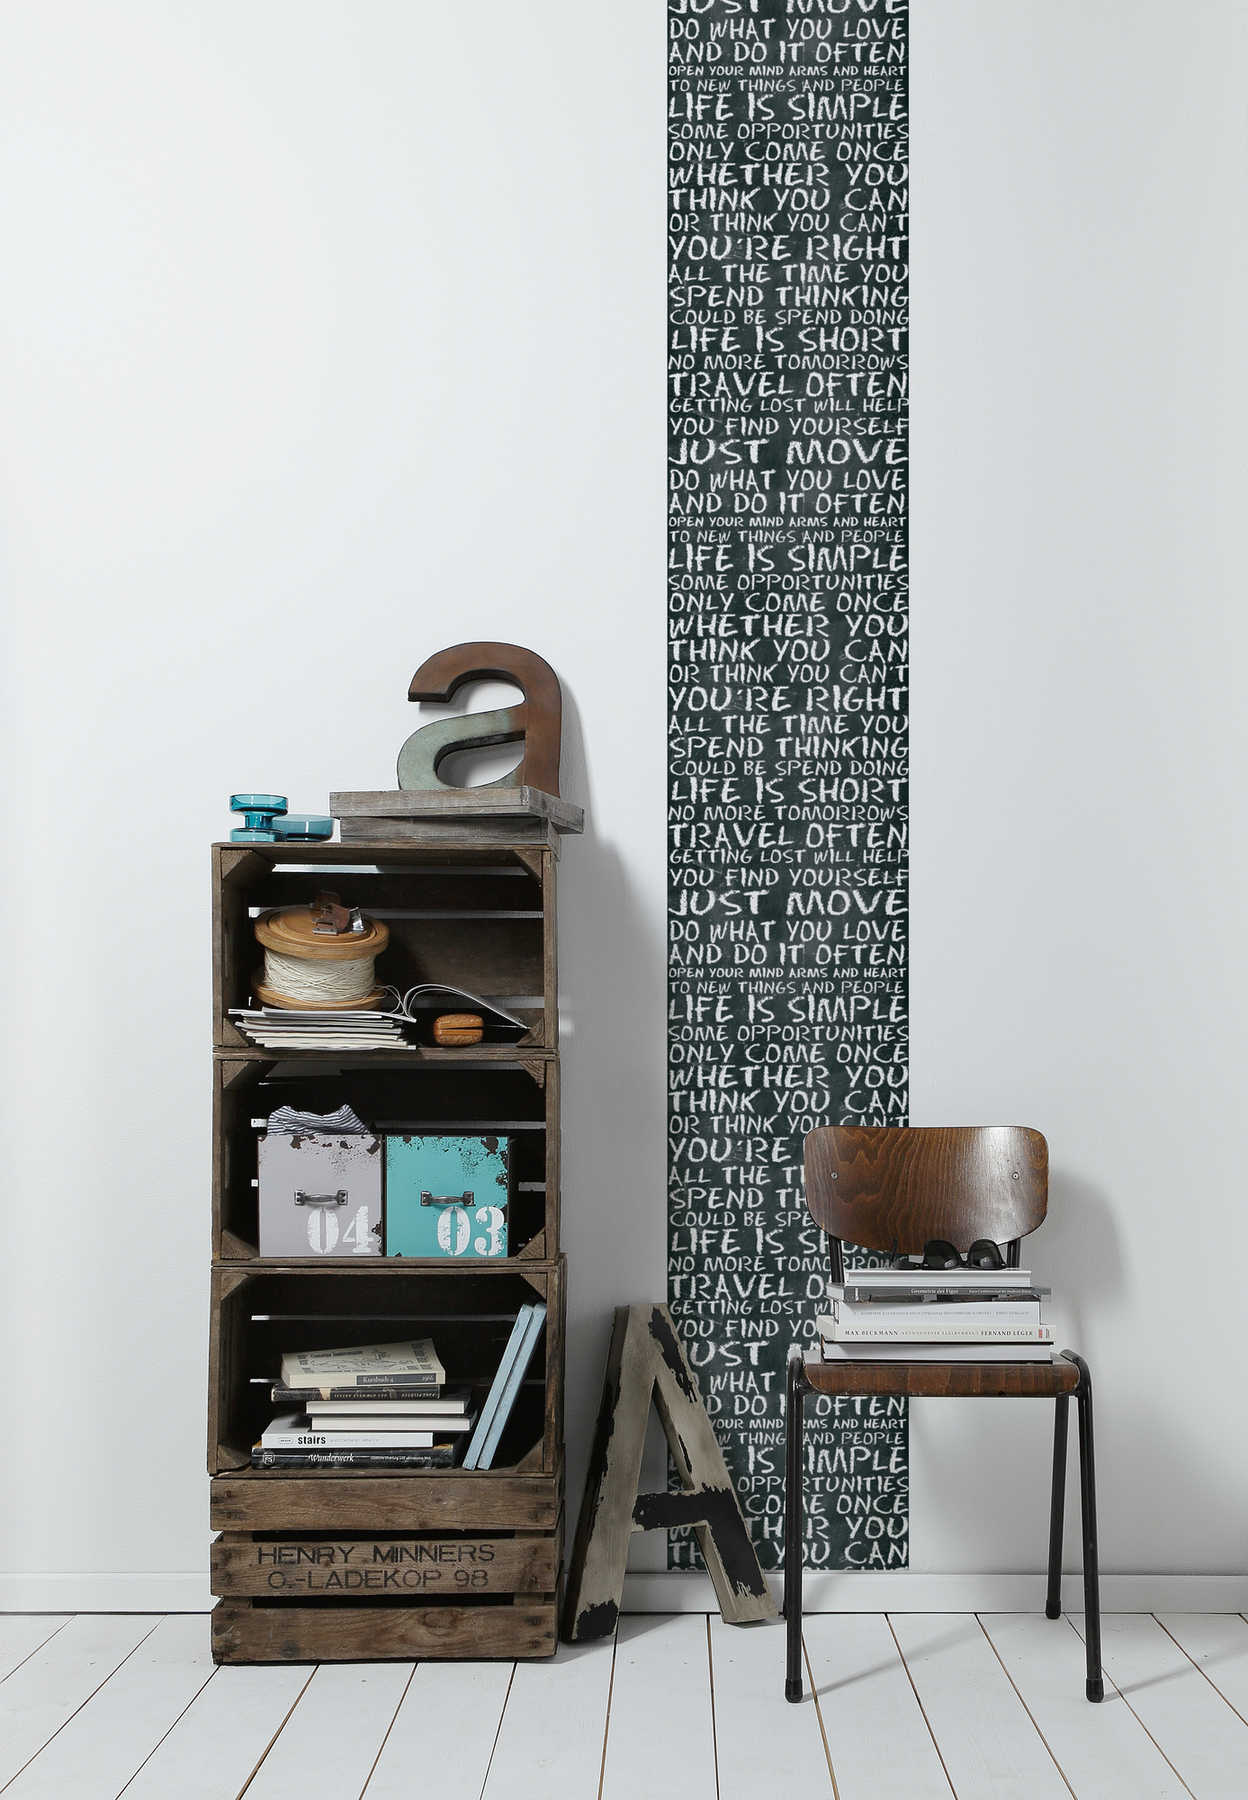             Black & White Wallpaper Panel Self glue with Blackboard & Chalk Design
        